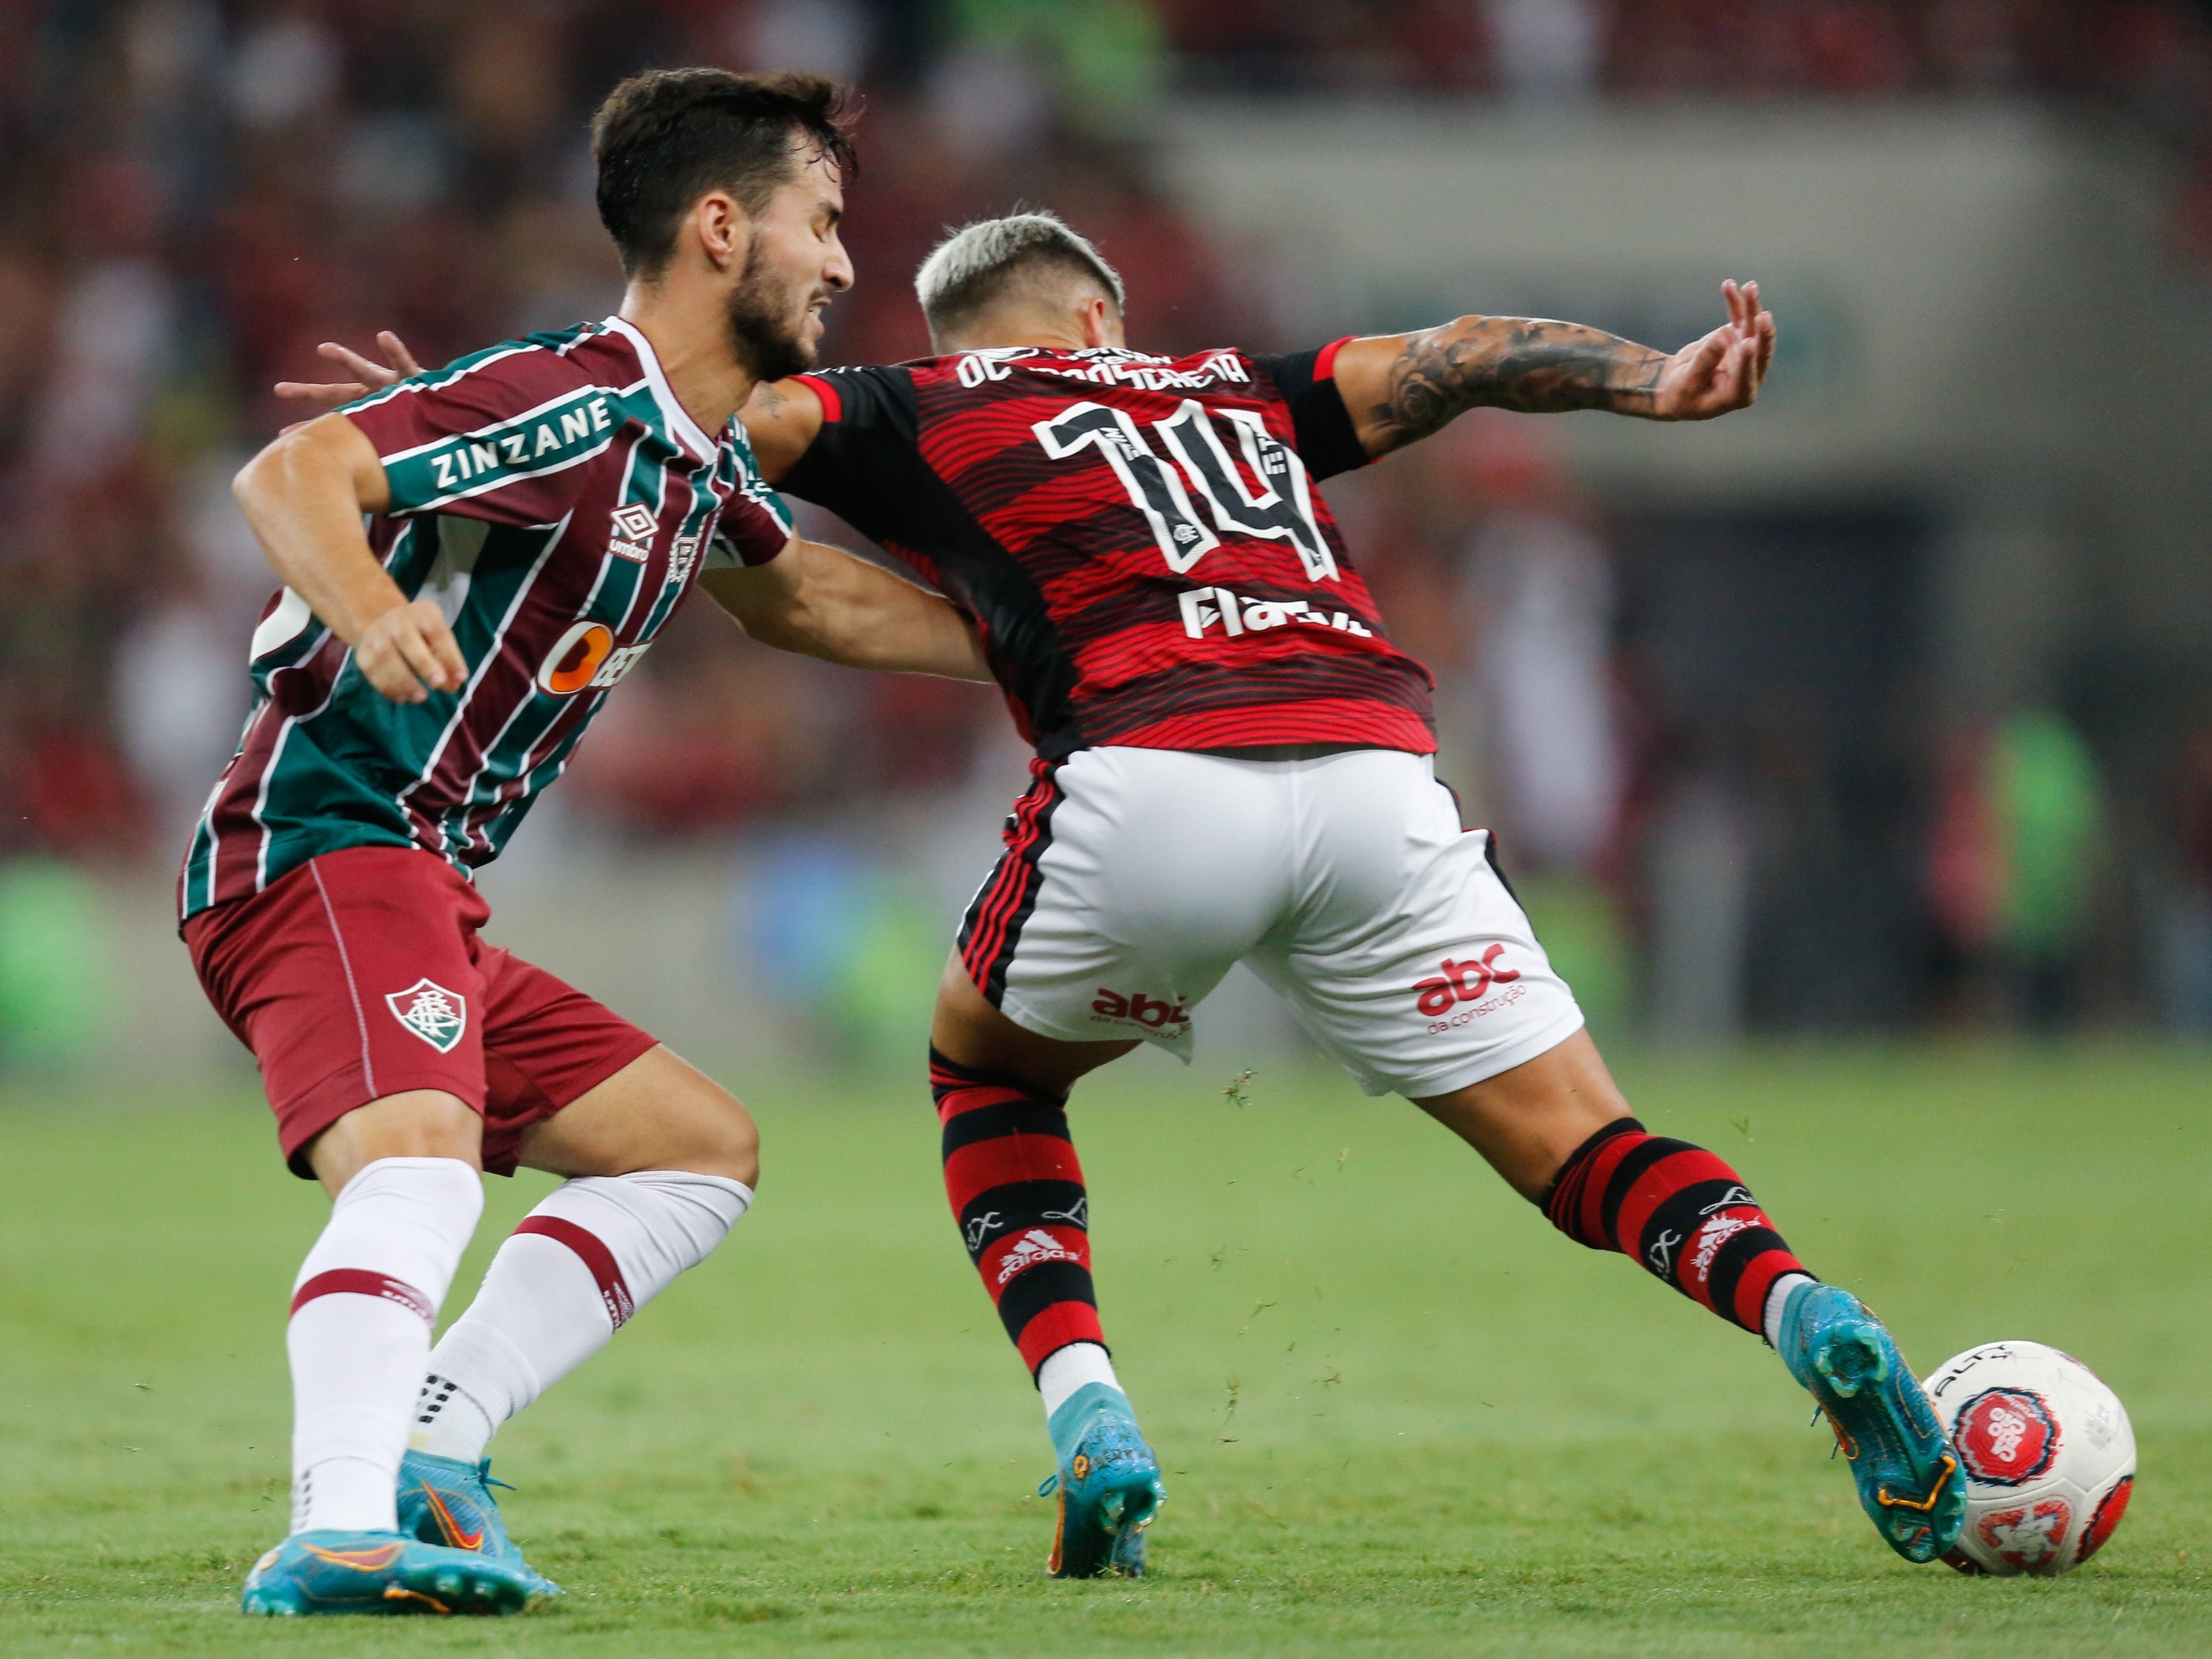 Onde assistir Flamengo x Fluminense 02 04 2022?